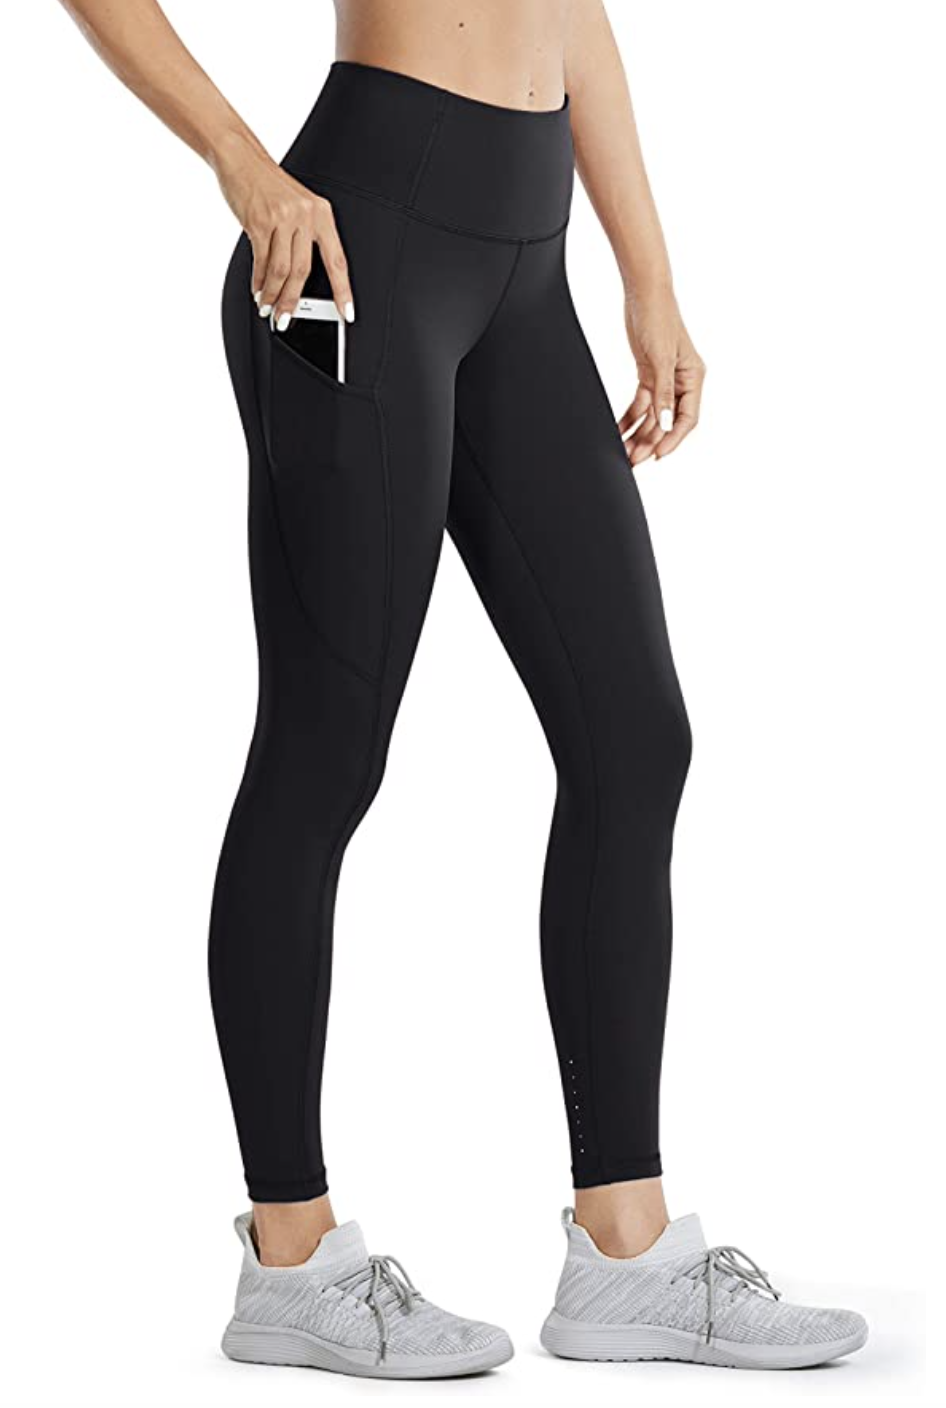 Meghan Markle favourite leggings: Lululemon Align on sale